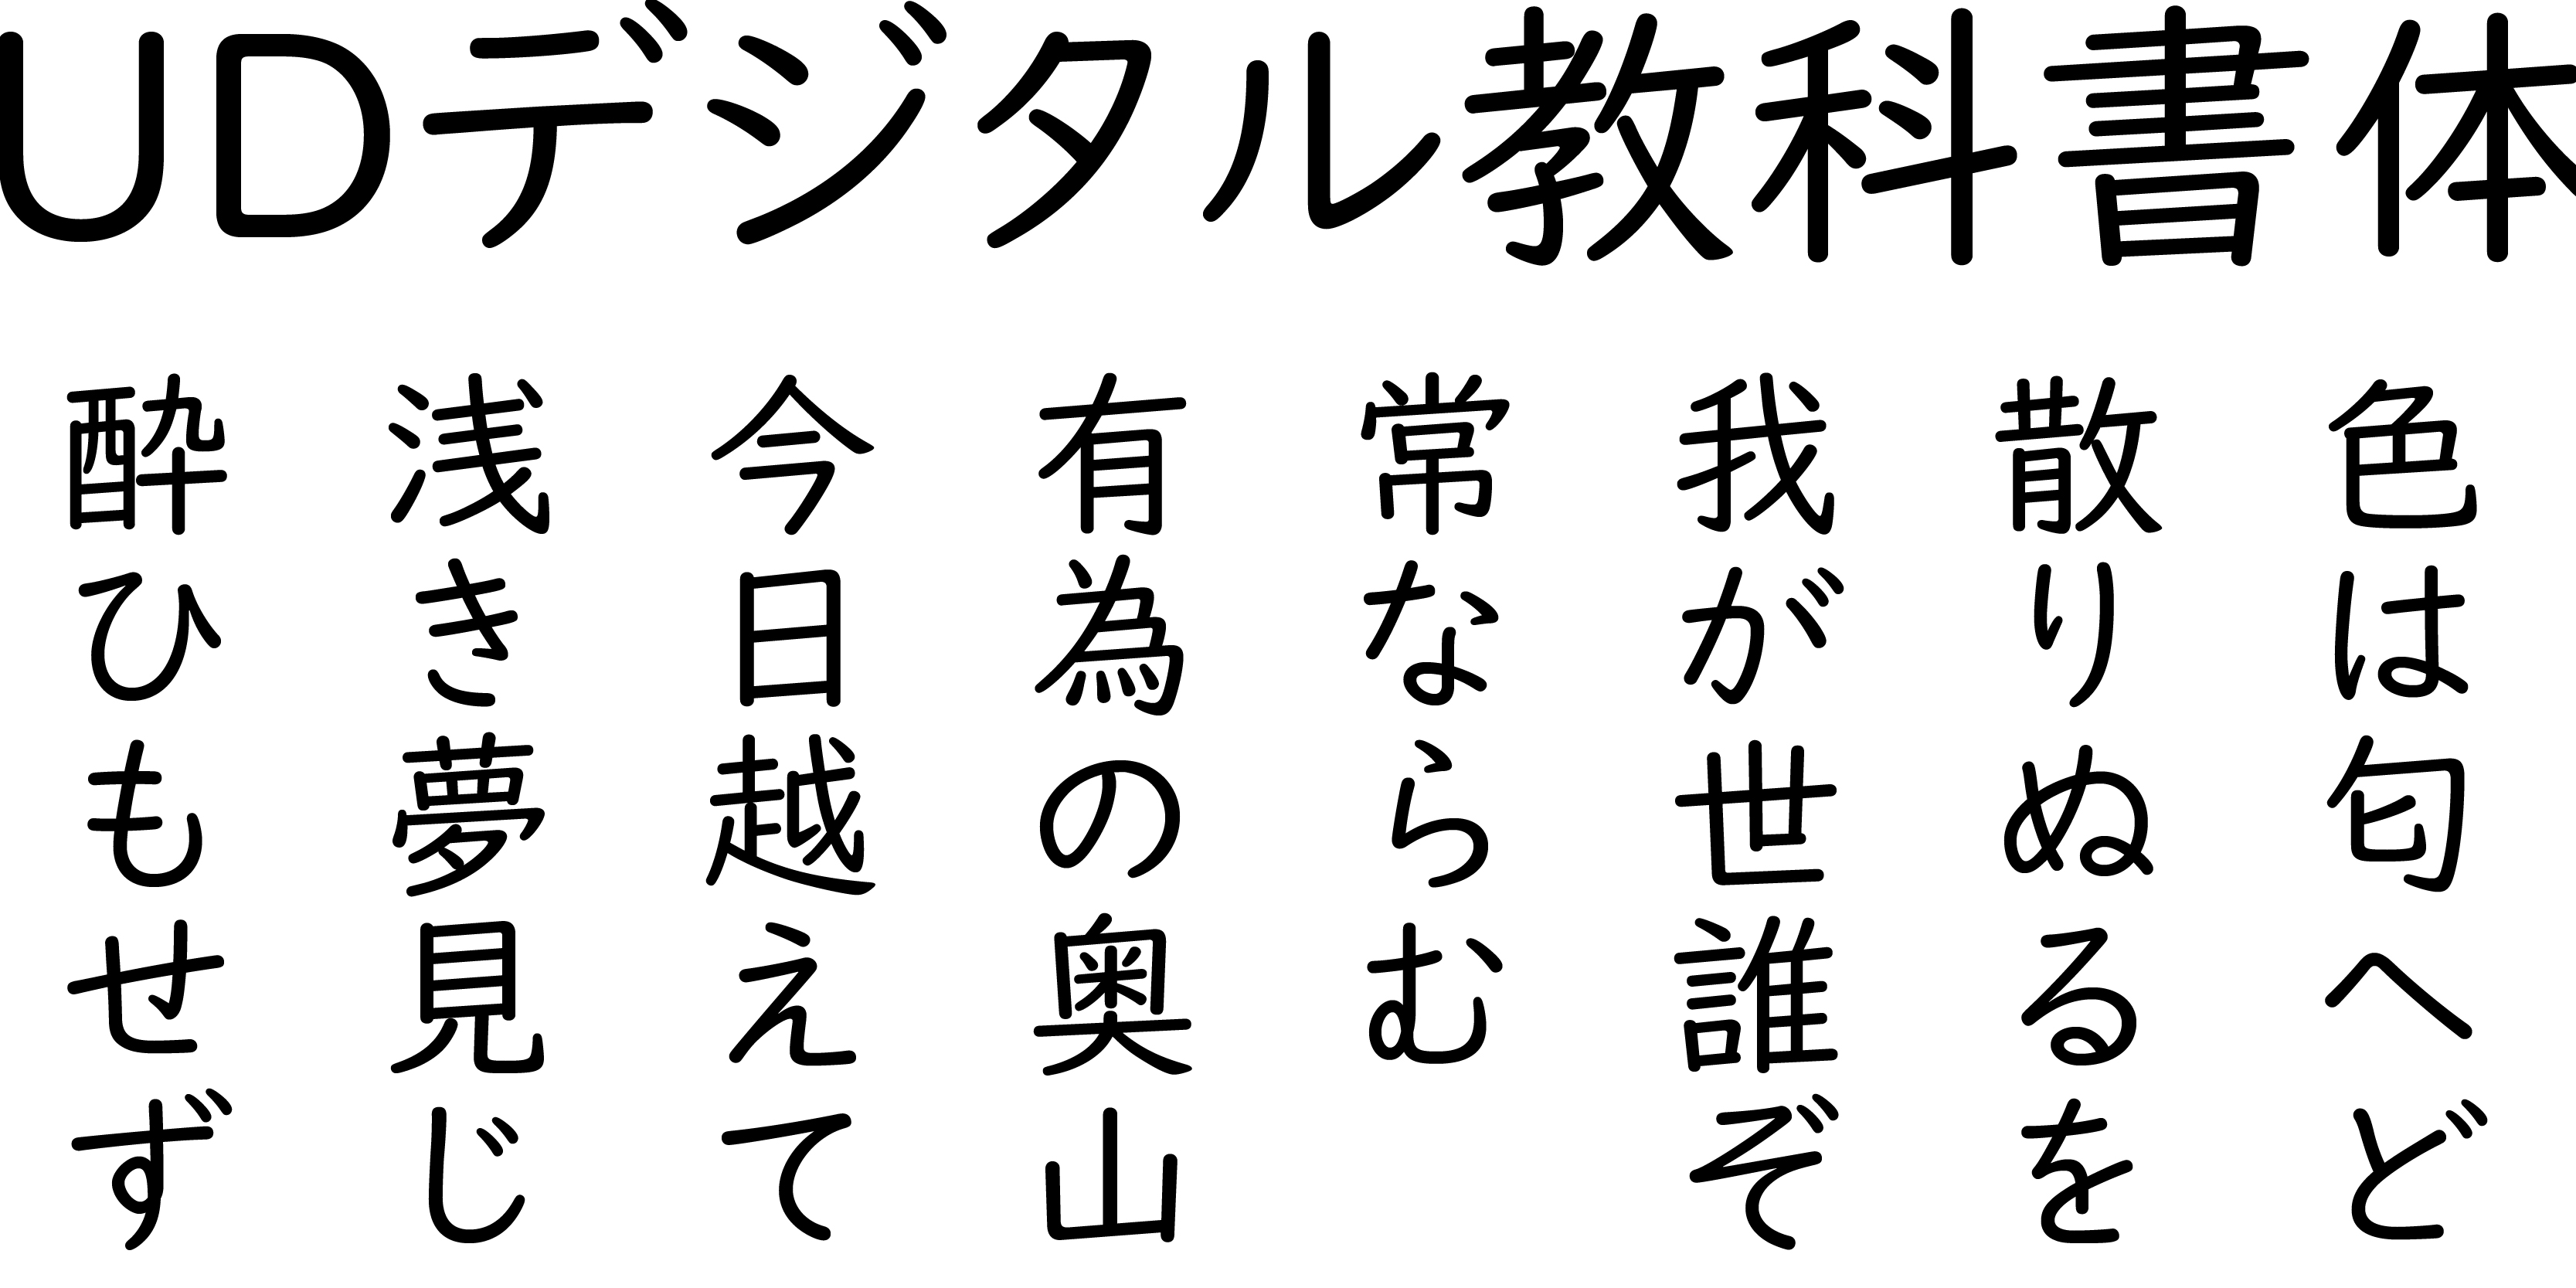 Morisawa | Adobe Fonts